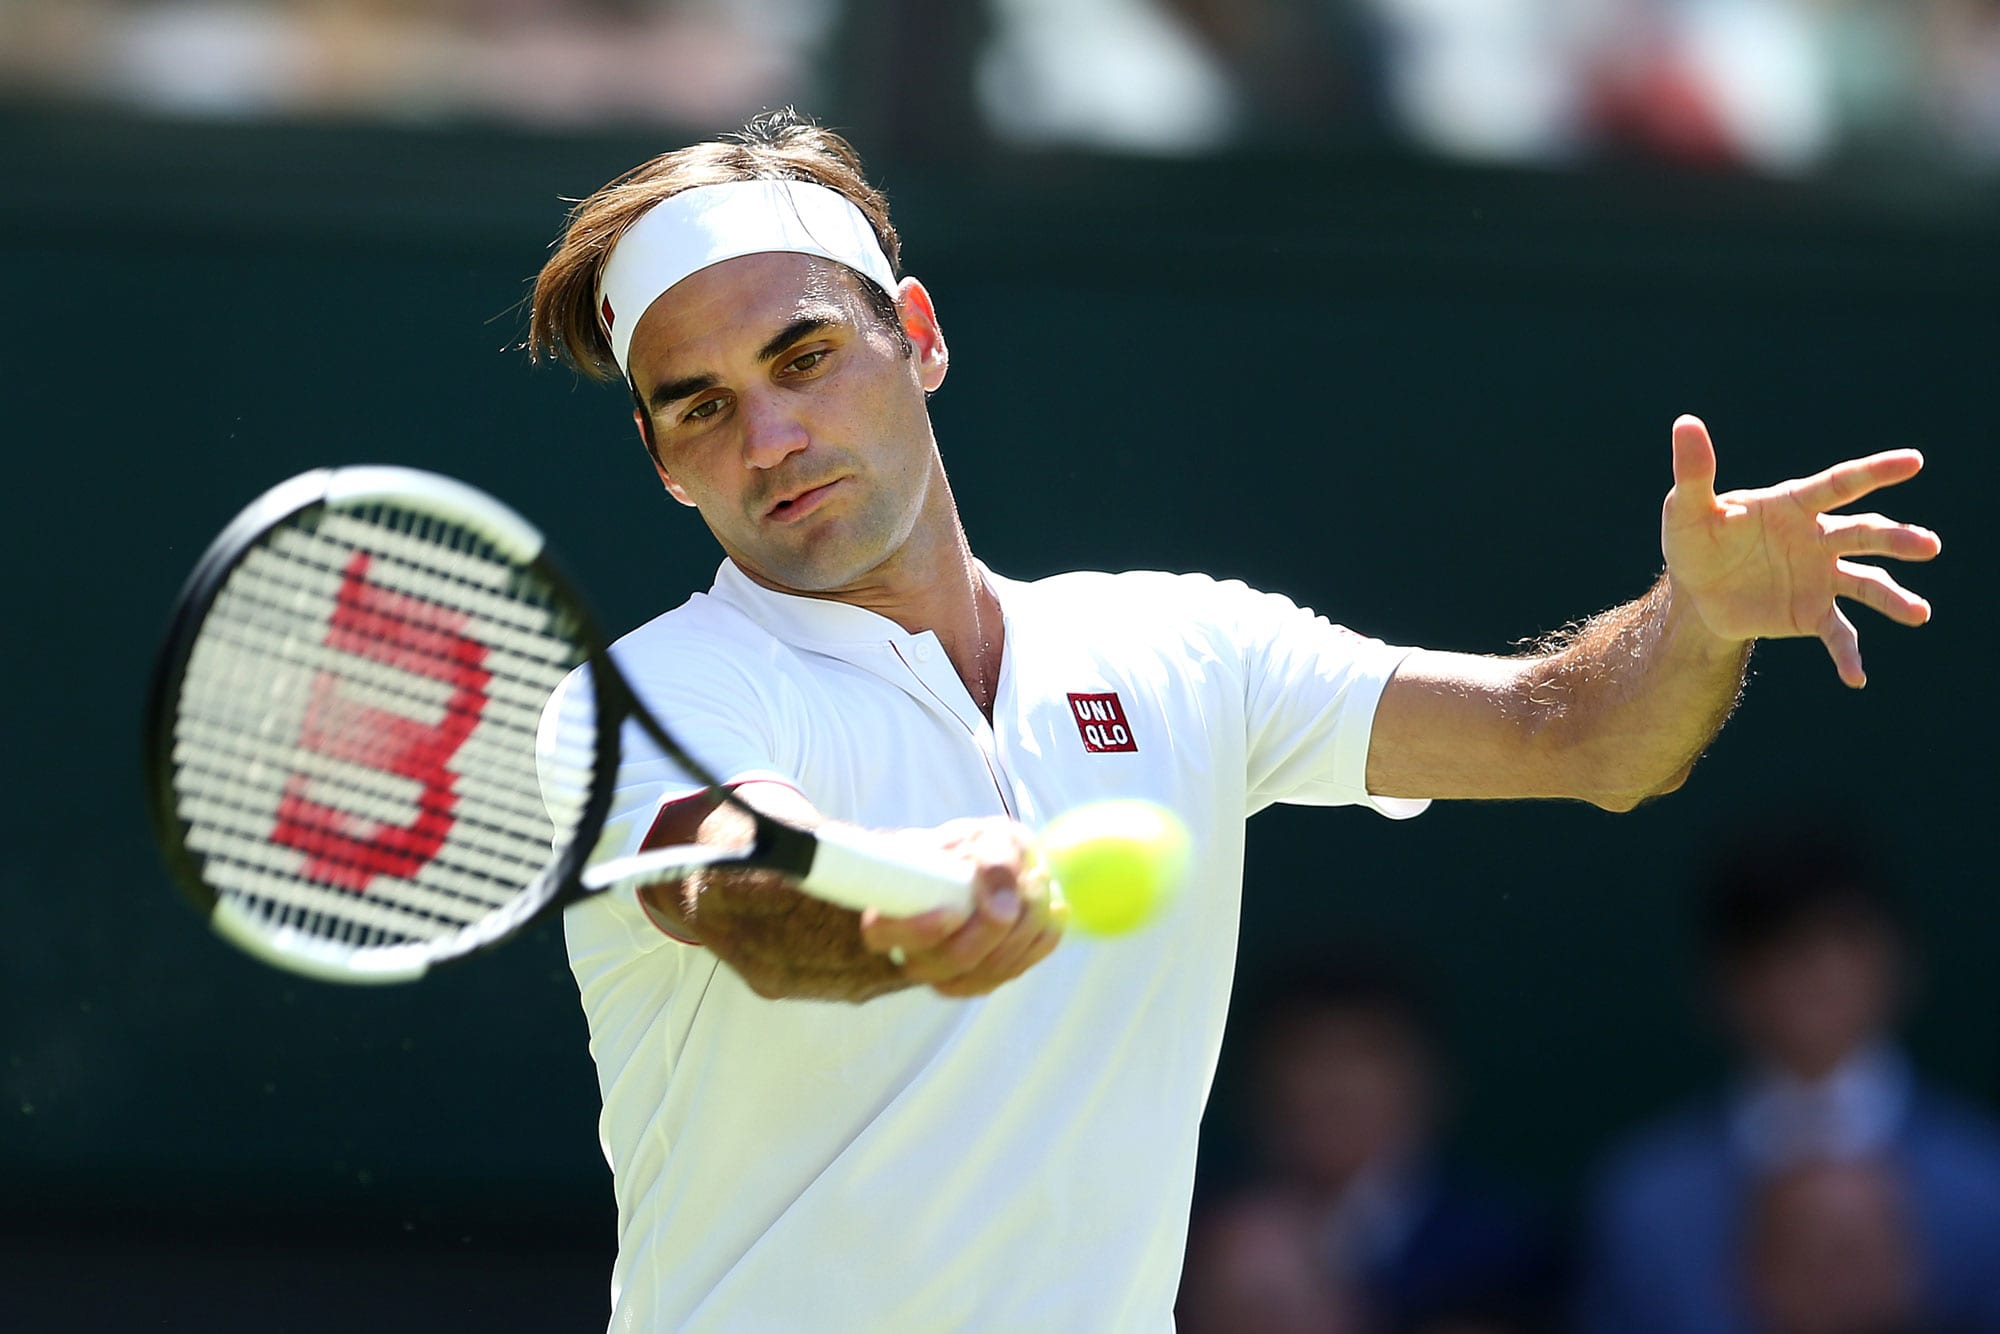 noedels Impressionisme reflecteren Roger Federer walks out at Wimbledon in Uniqlo shirt, not Nike